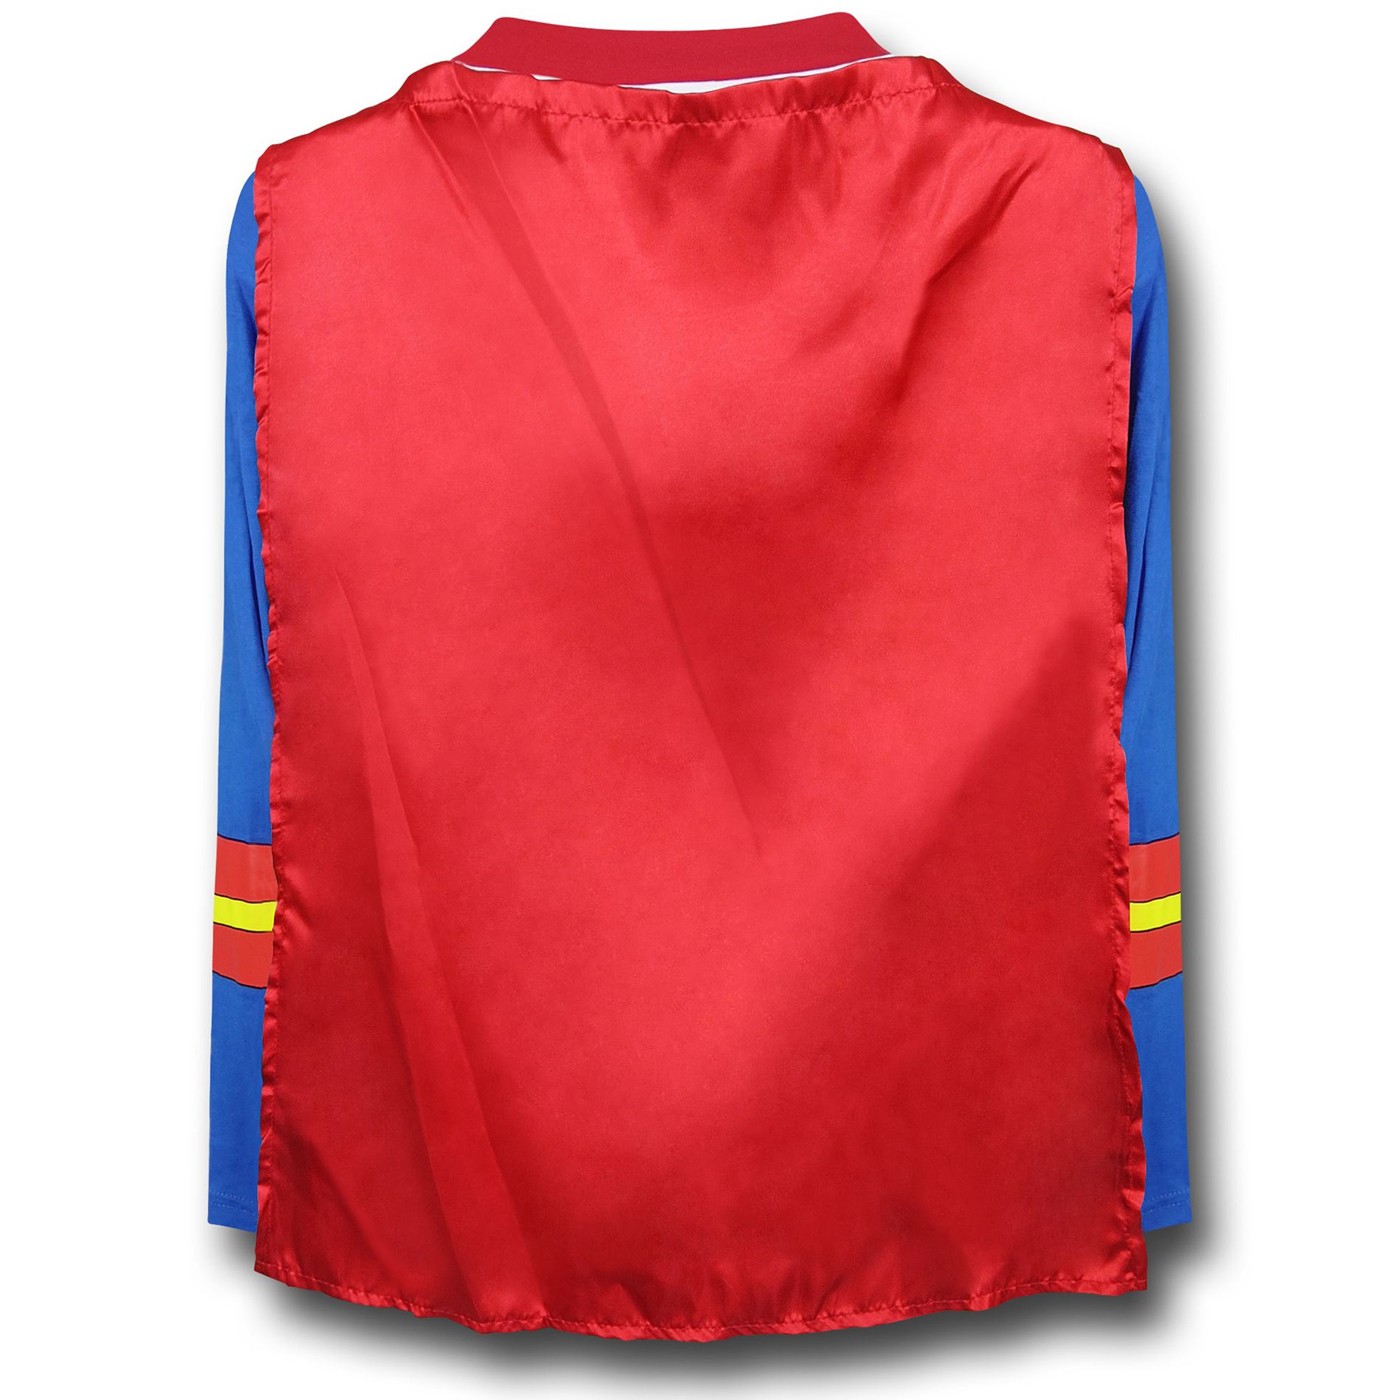 Supergirl LS V-Neck Caped Costume T-Shirt